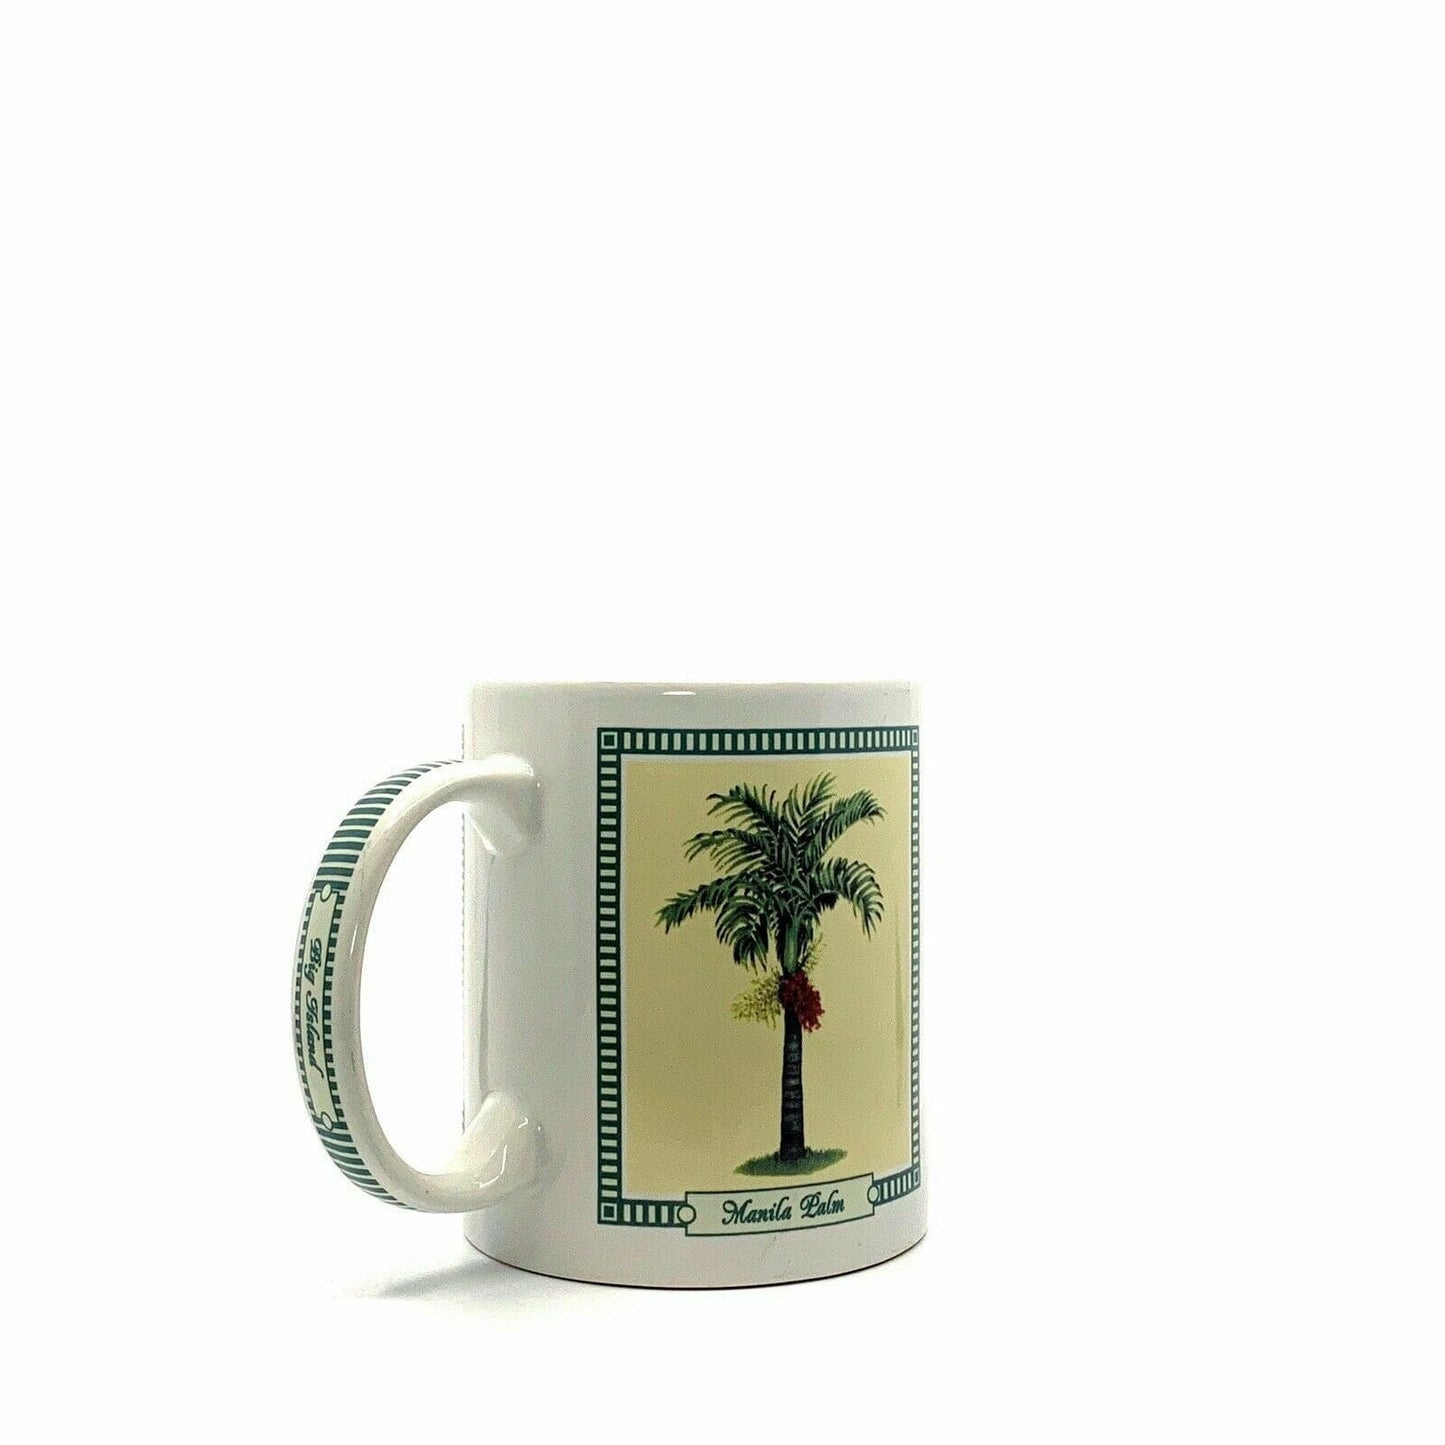 Hilo Hattie The Store Of Hawaii Coffee Tea Mug Cup Tropical Palms 2005